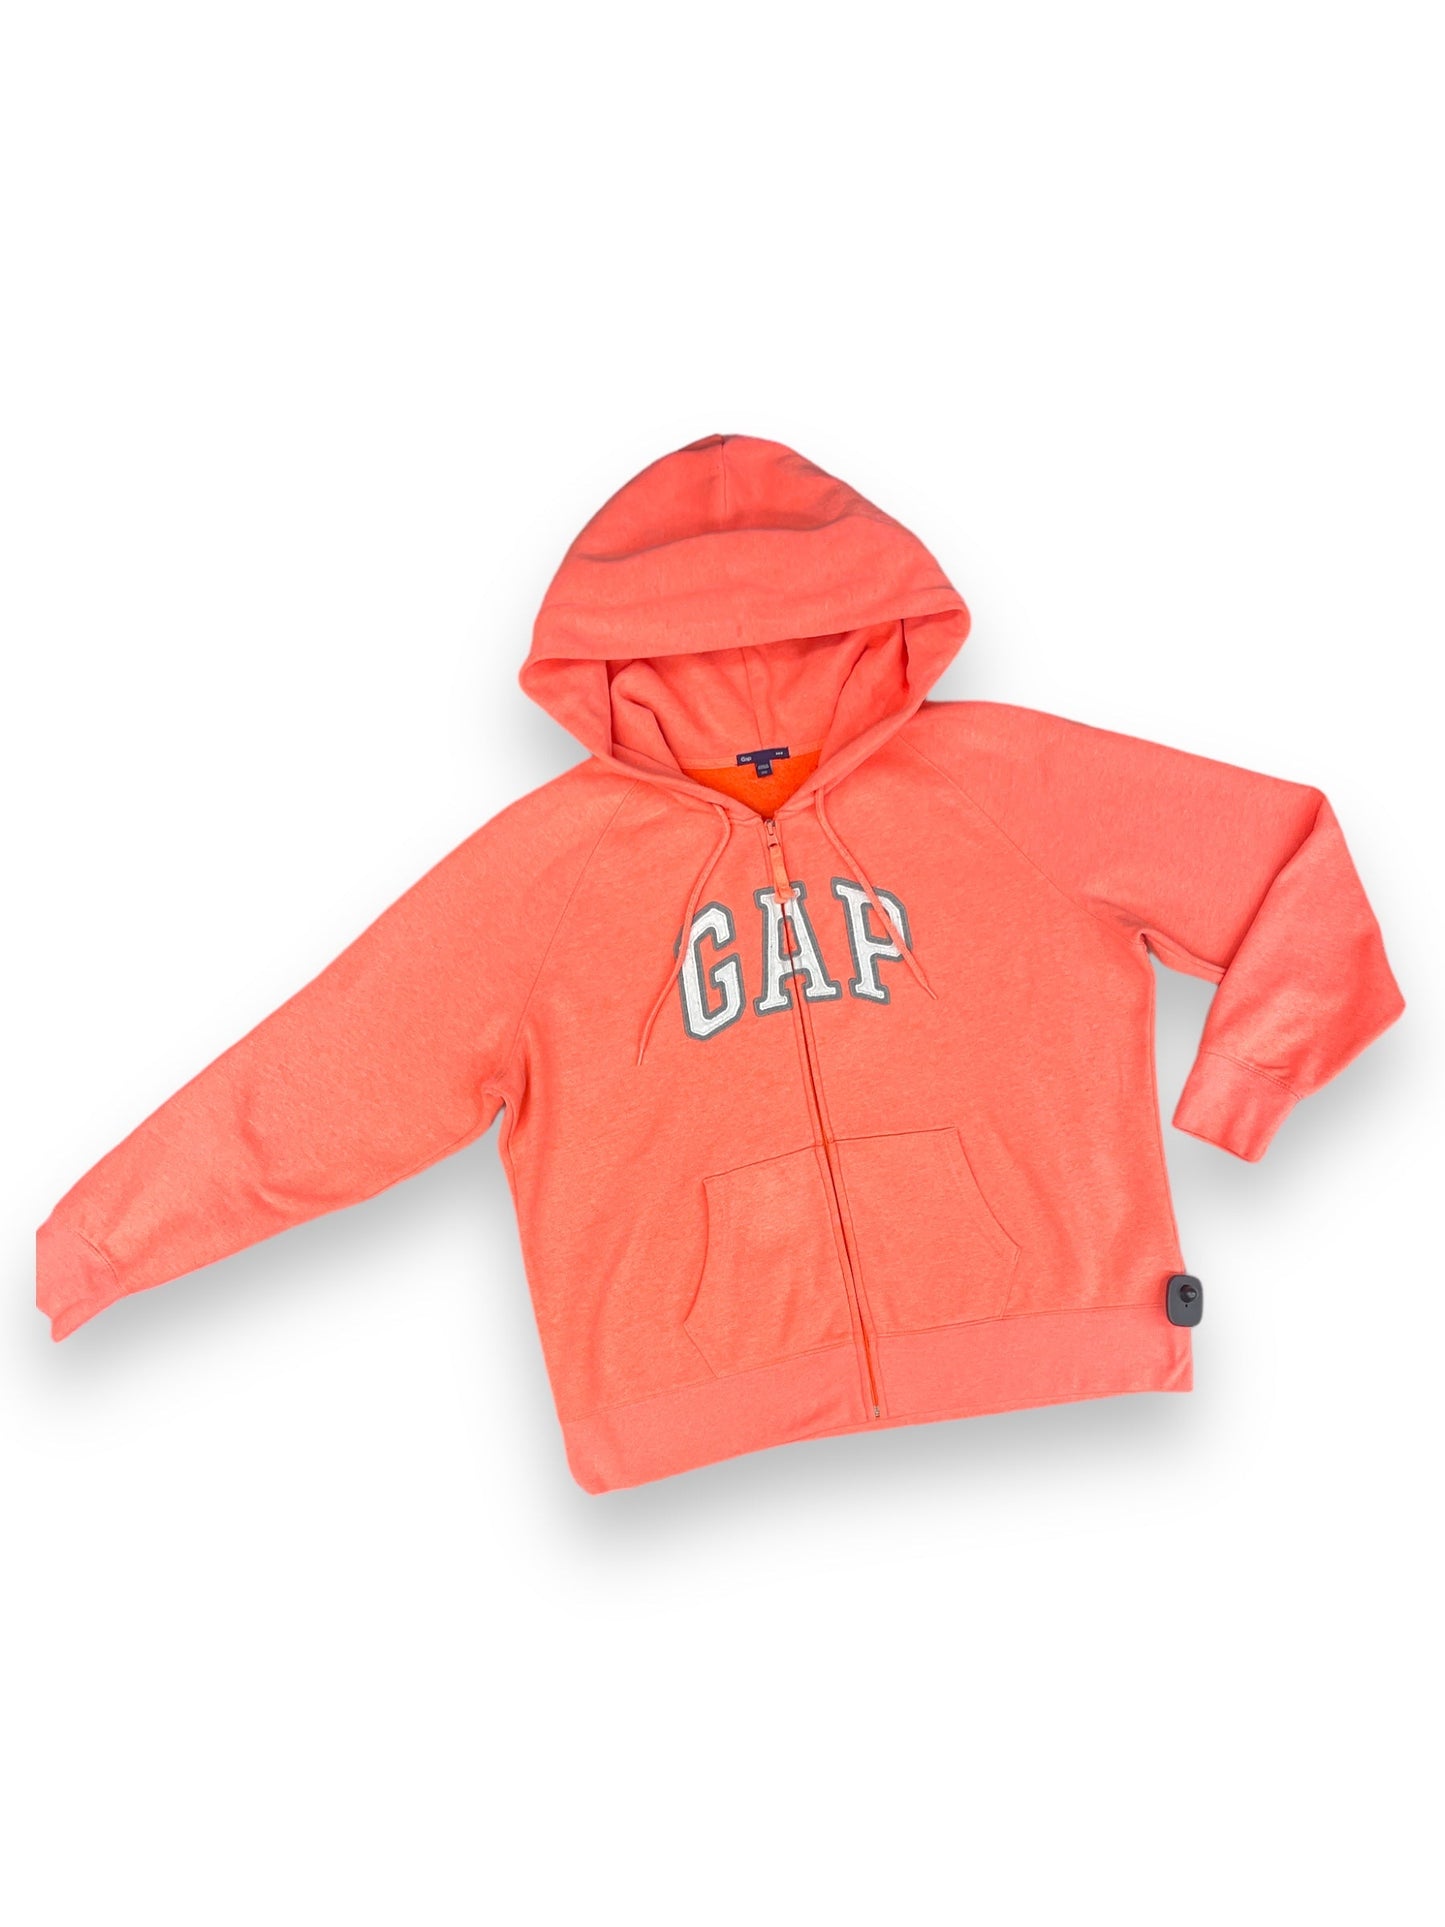 Sweatshirt Hoodie By Gap  Size: Xxl